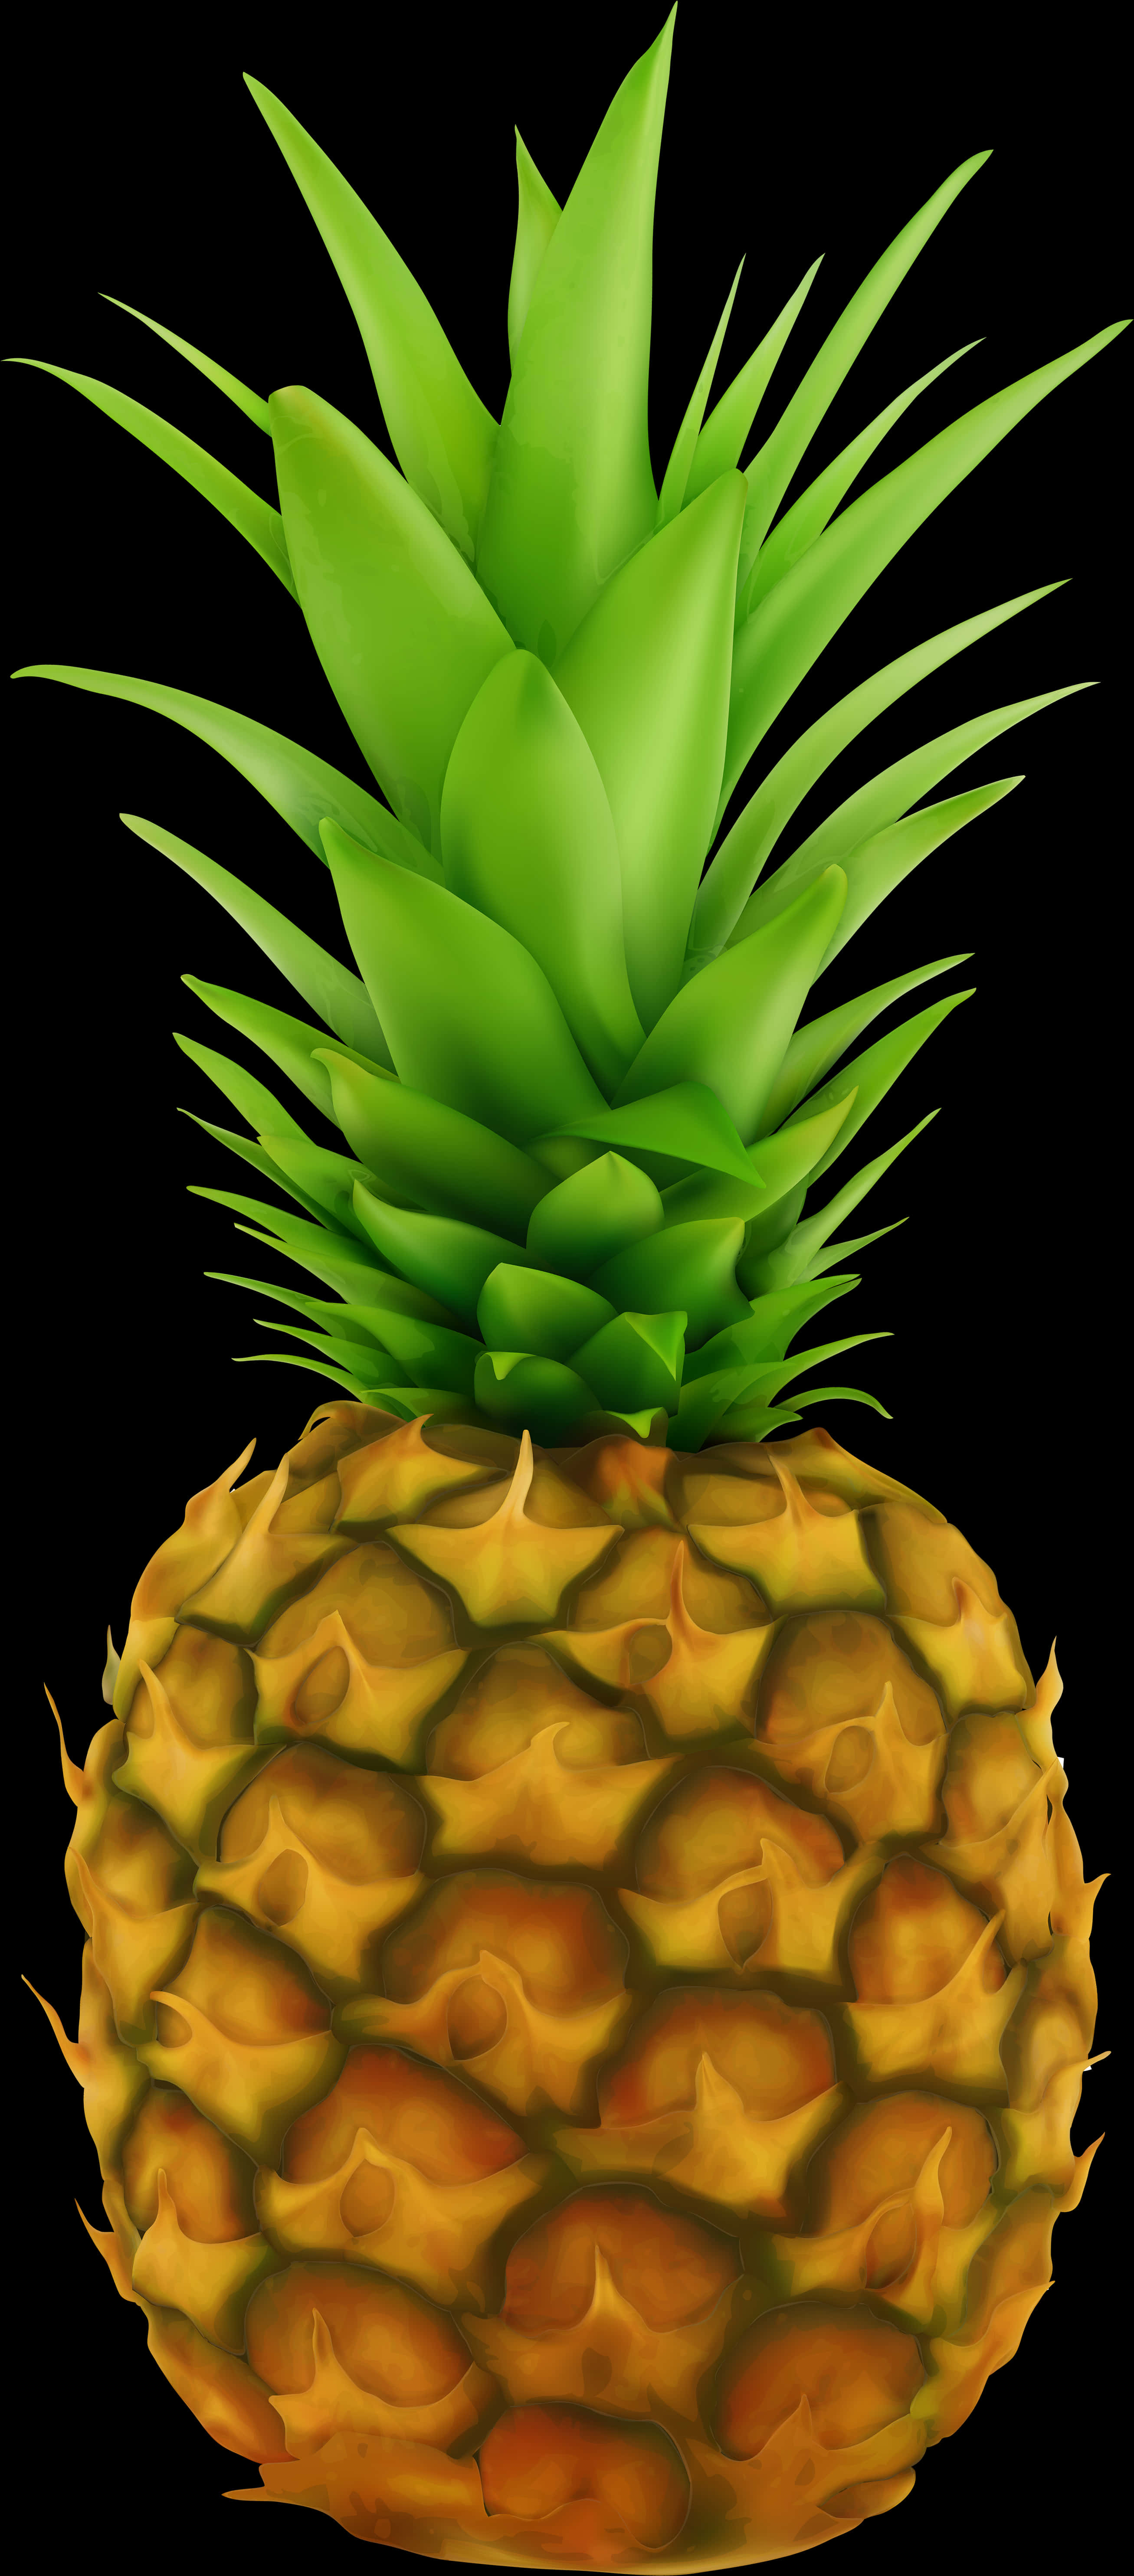 Vibrant Pineapple Artwork PNG image